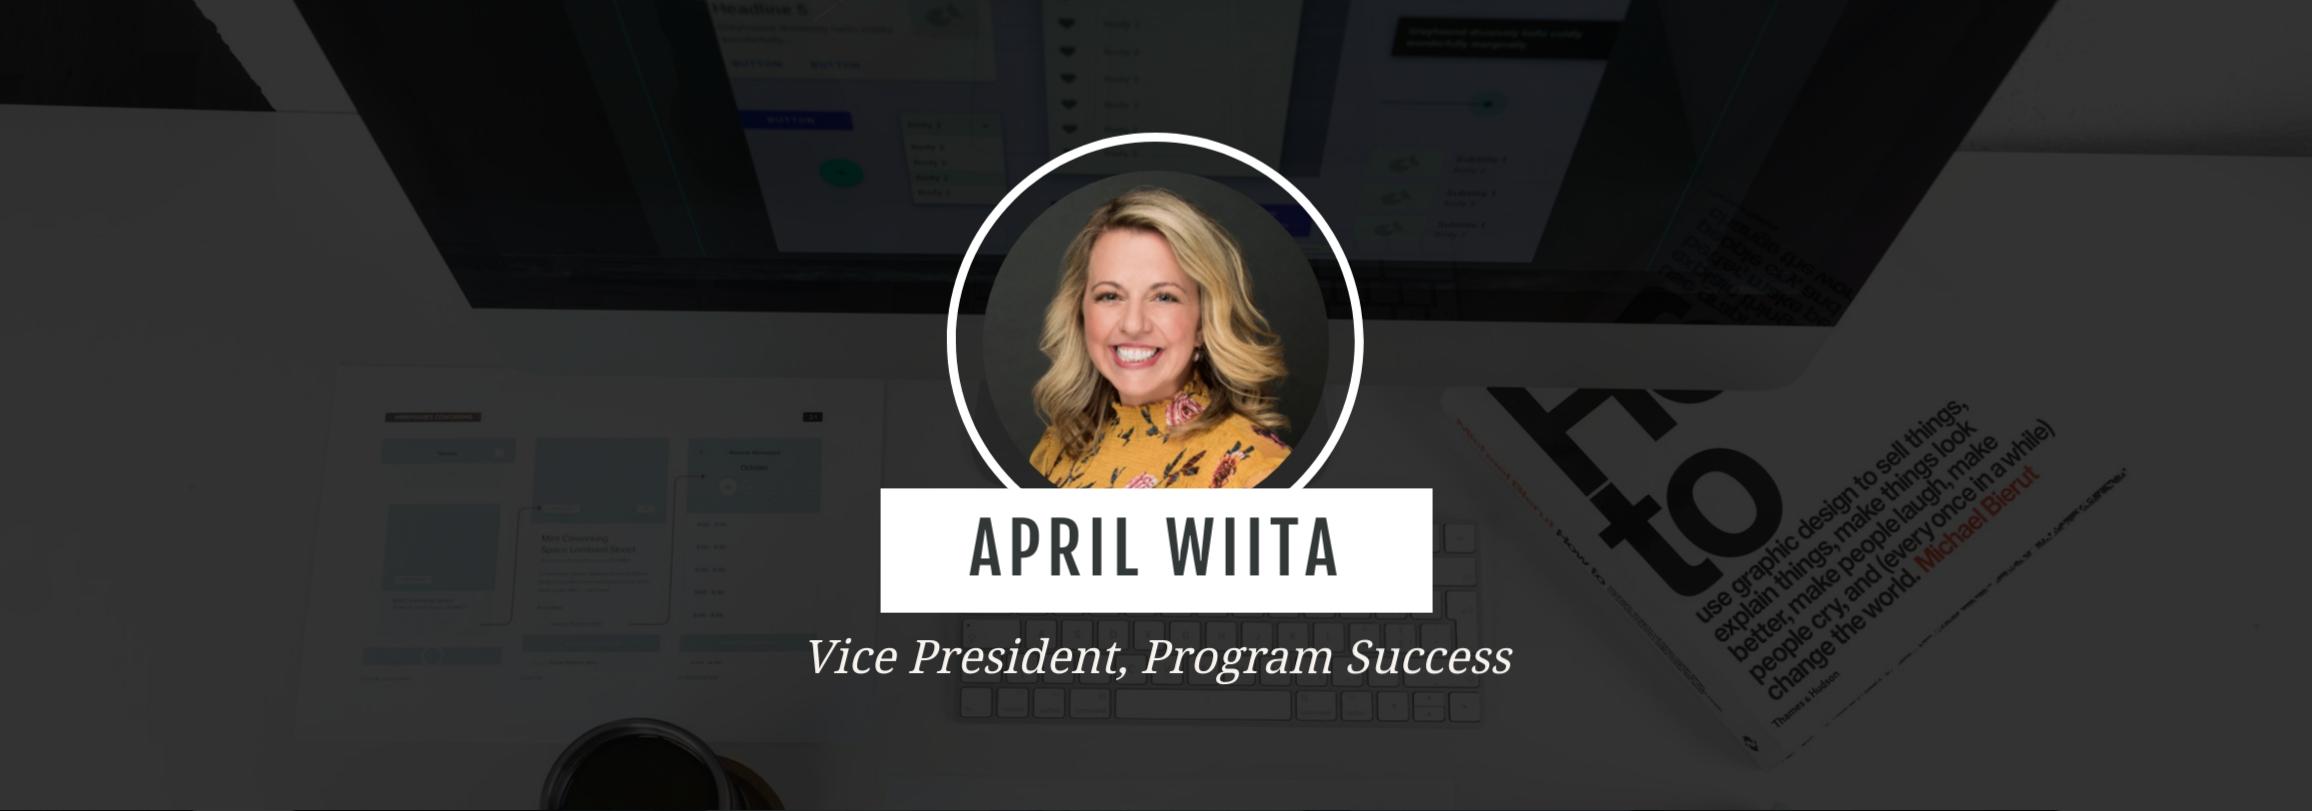 April Wiita VP Program Success